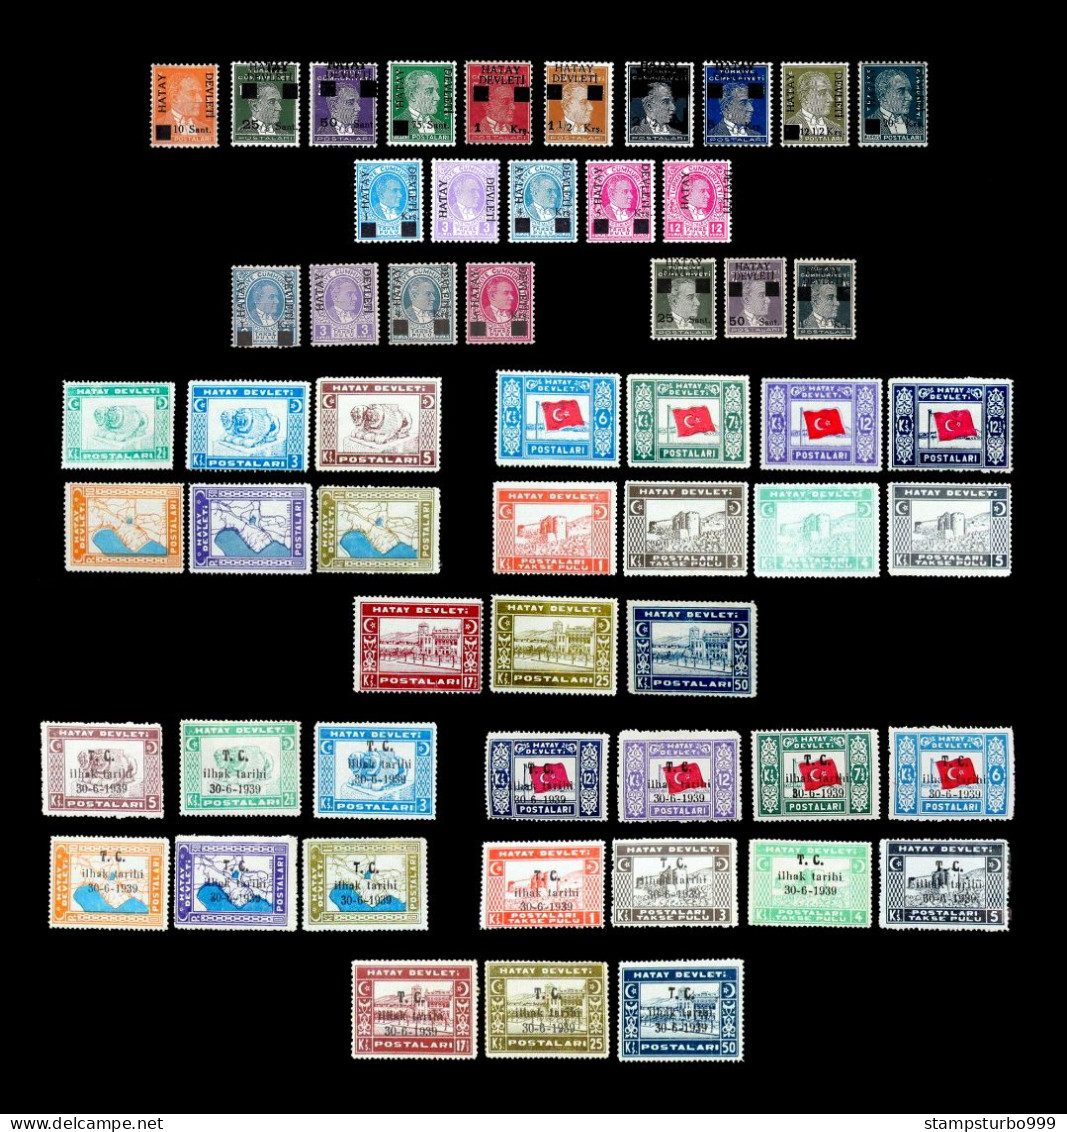 Hatay, Turkey (Alexandretta, Alexandrette,) Complete Sets (52 Stamps), Hatay Only,  MNH ** - 1934-39 Sandjak D'Alexandrette & Hatay